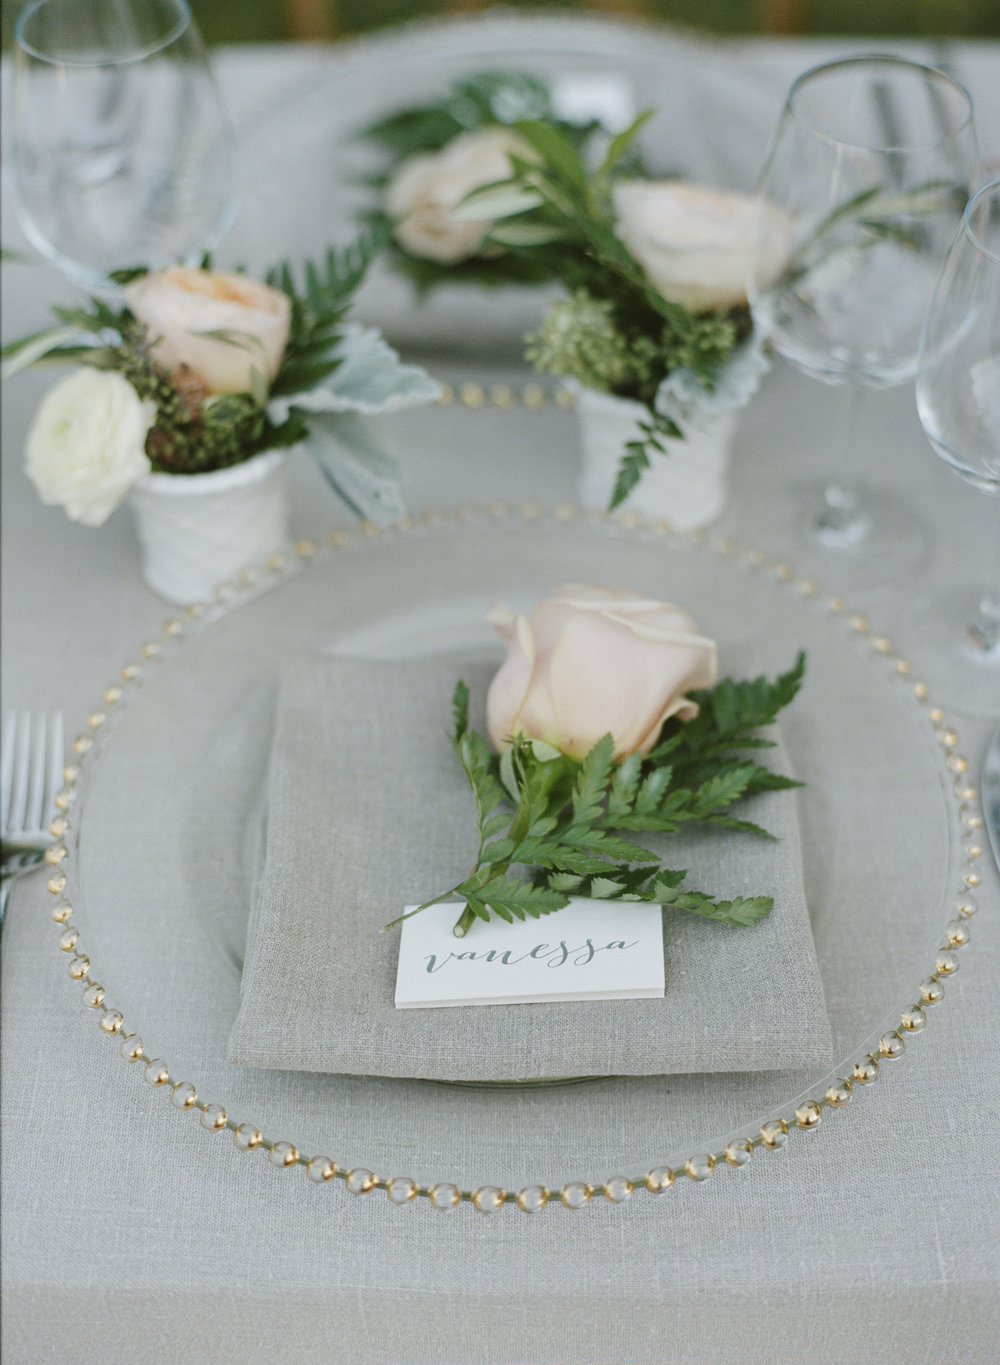 Violette-fleurs-roseville-sacramento-california-Flower-farm-inn-wedding-florist-spring-tablescape-luxury-detail-photos.jpg